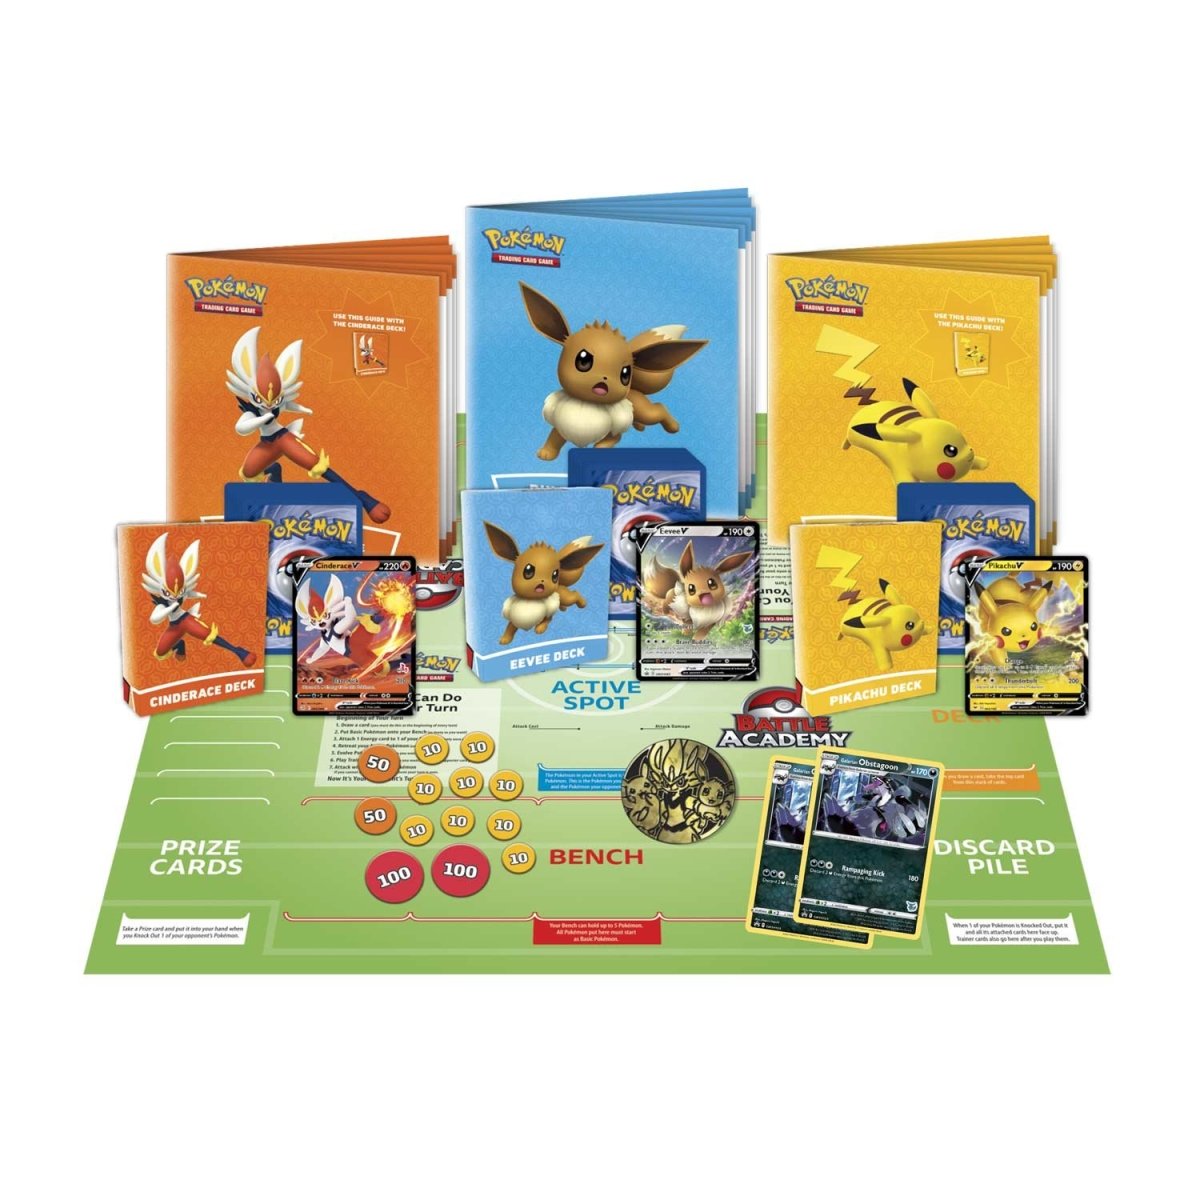 Pokémon TCG's Battle Academy box gets a 2022 update with Pikachu, Eevee and  Cinderace decks and Pokémon V cards